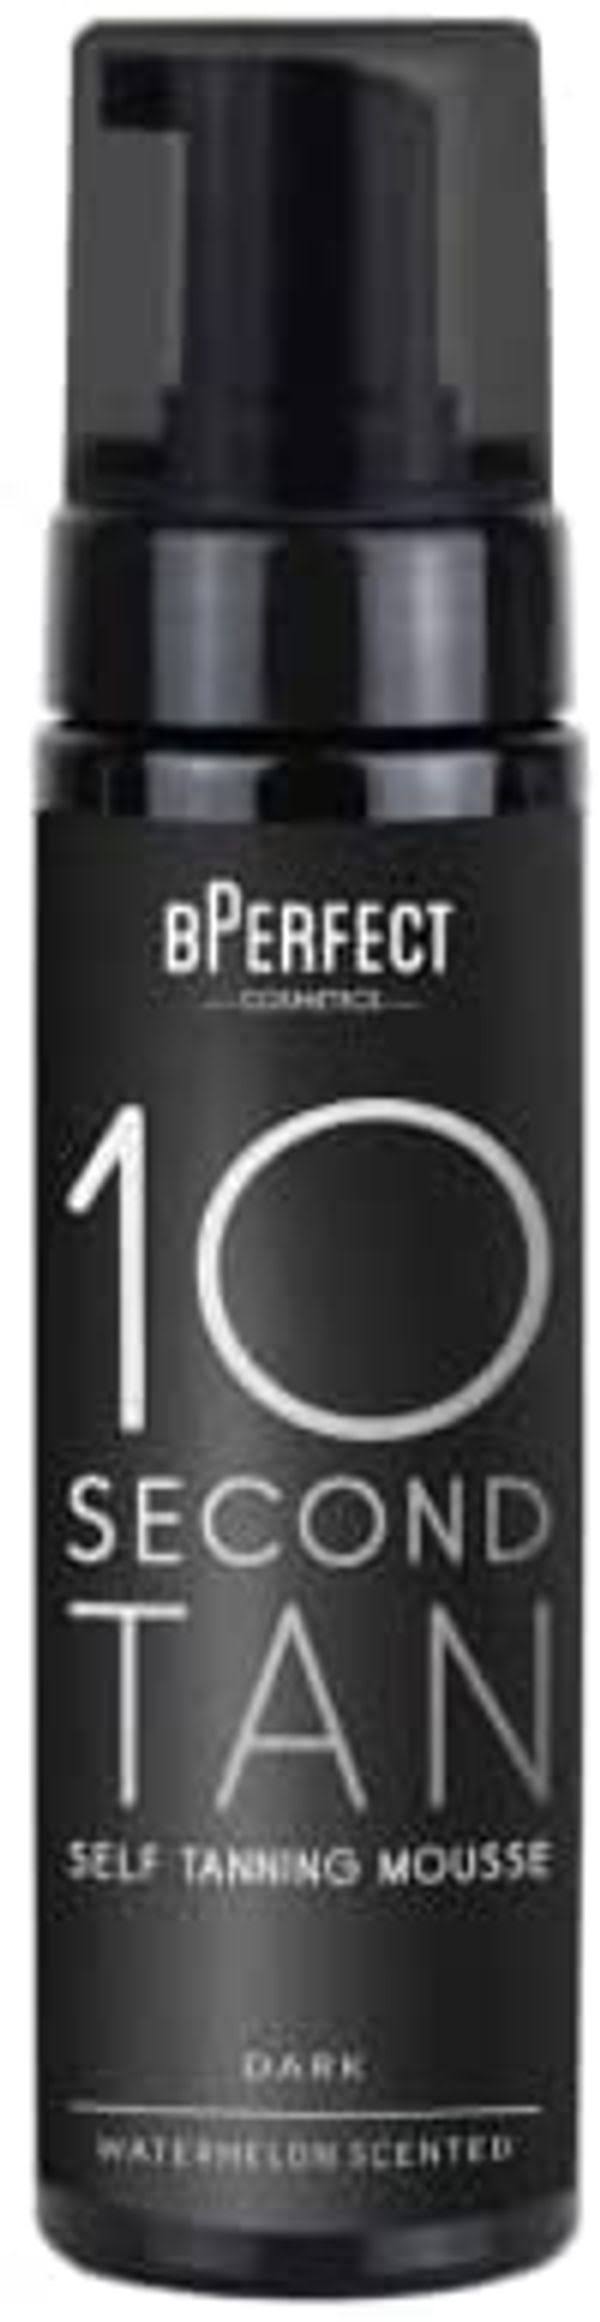 bPerfect 10 Second Tan Self Tanning Mousse - Dark 200ml